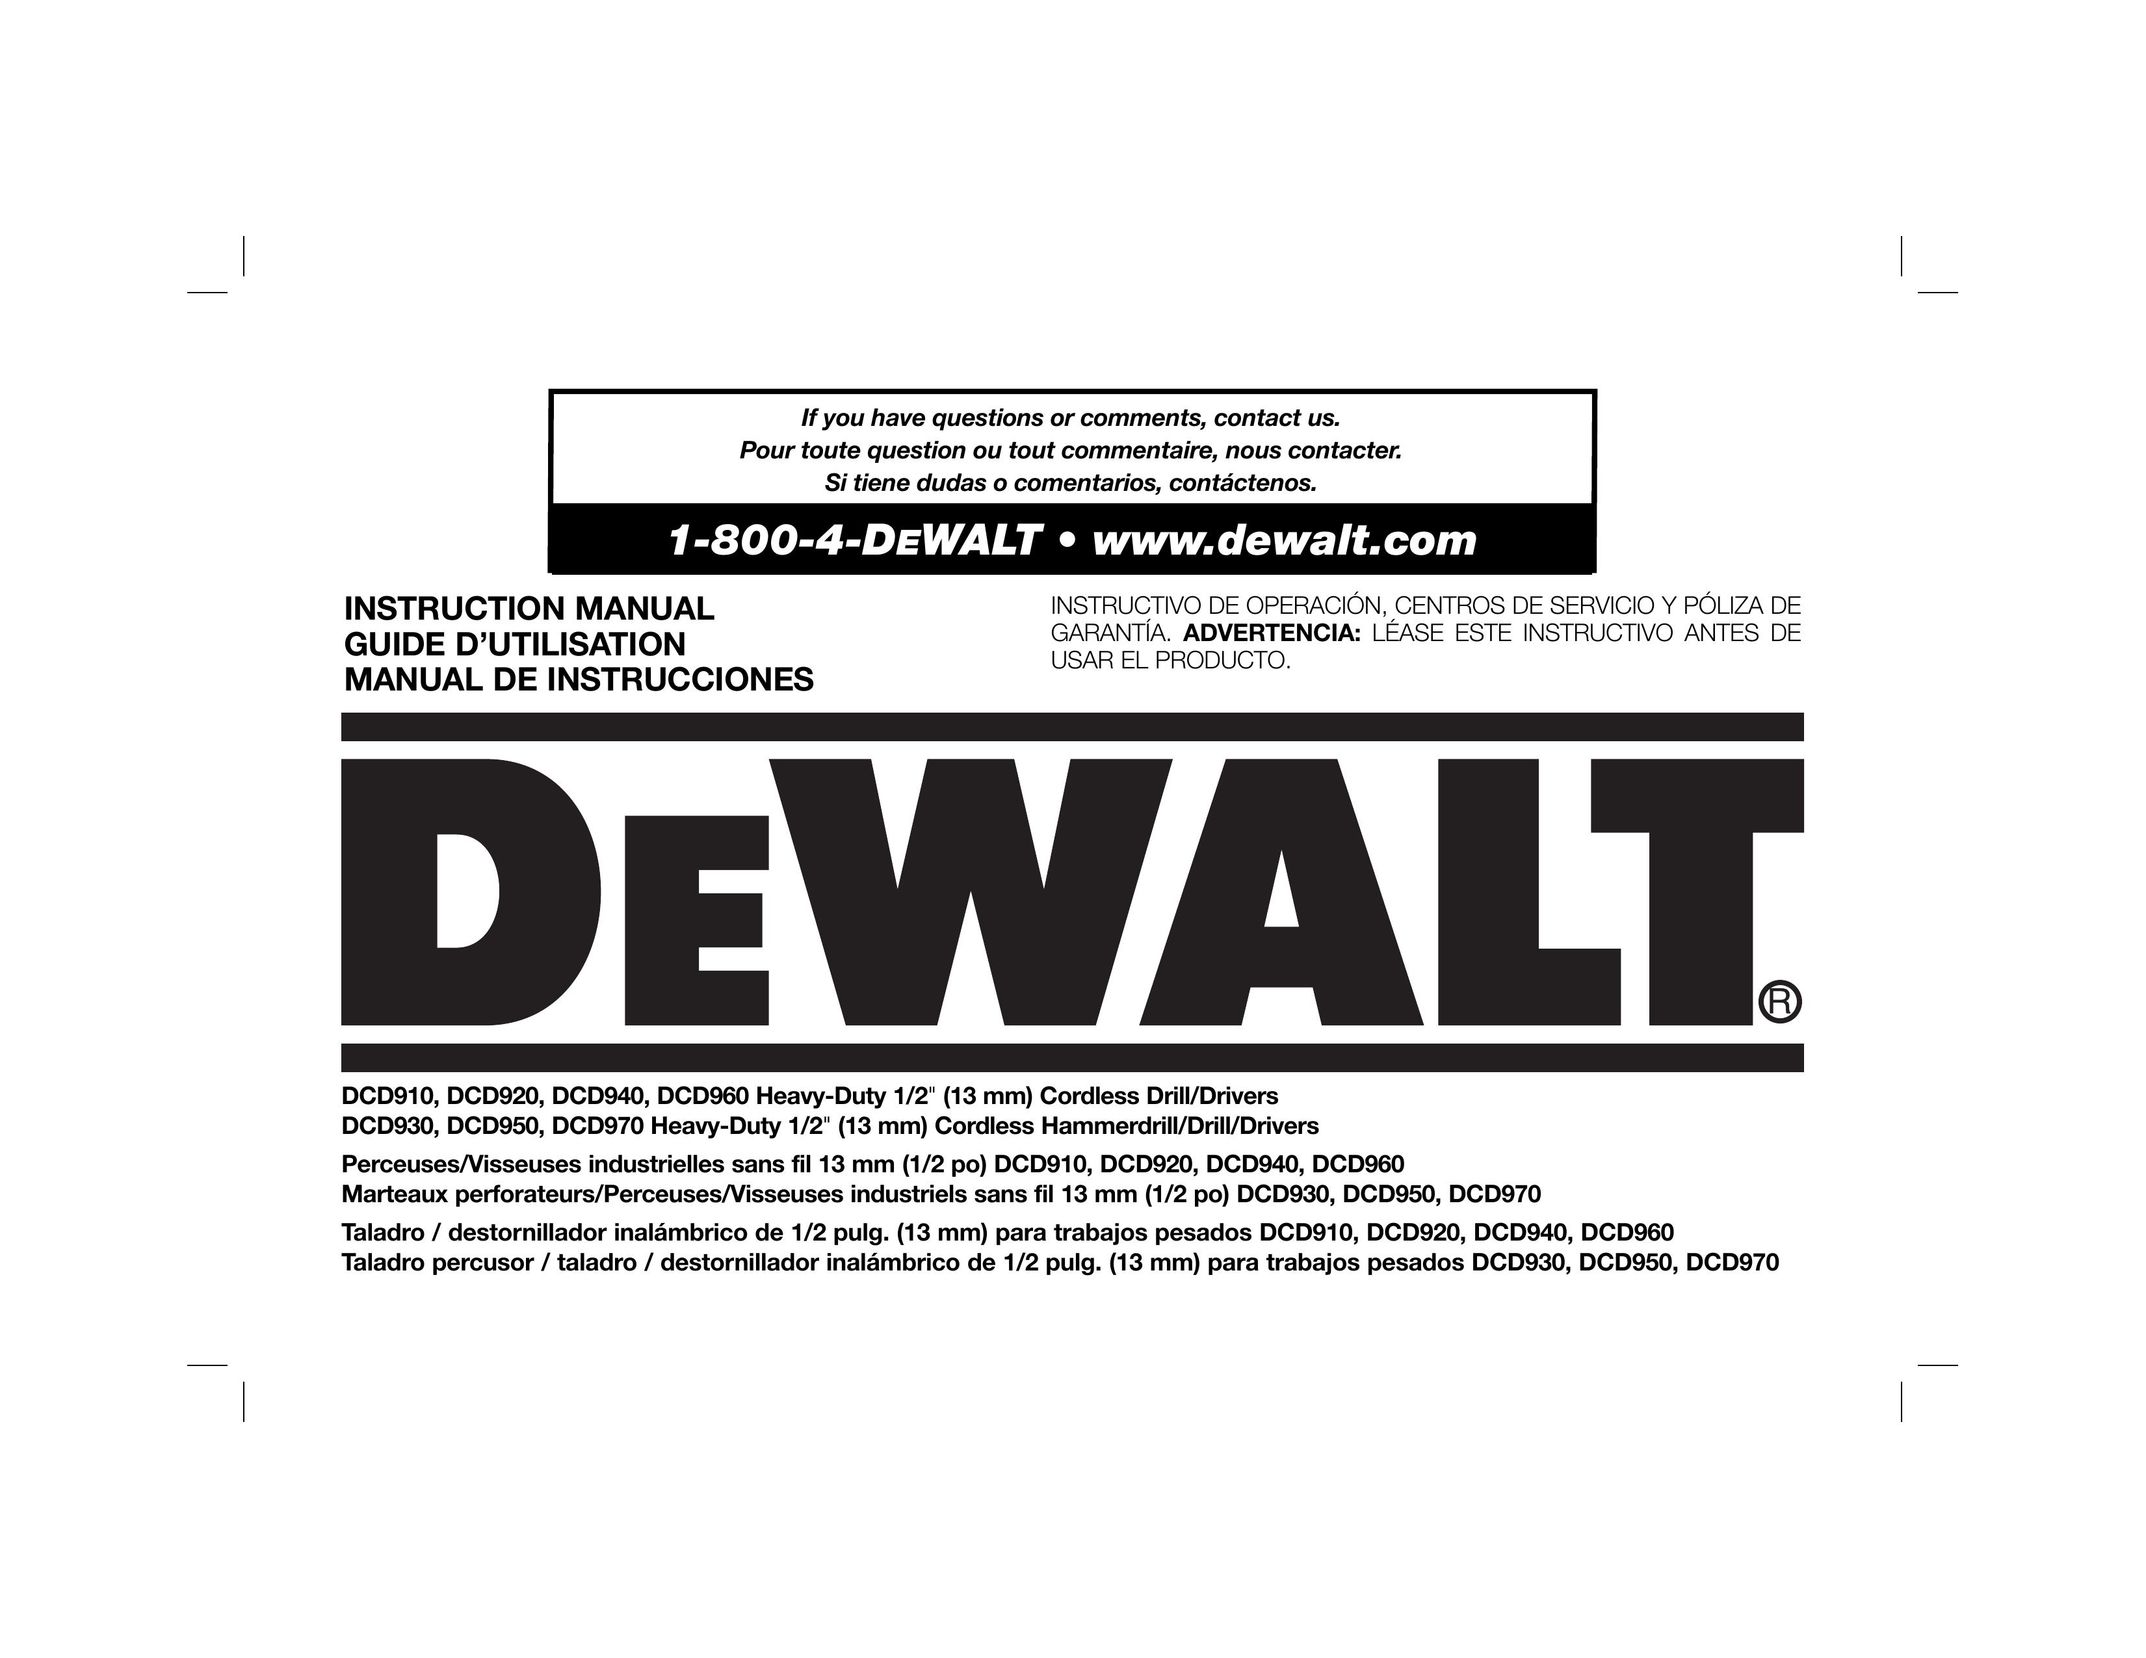 DeWalt DCD970 Cordless Drill User Manual